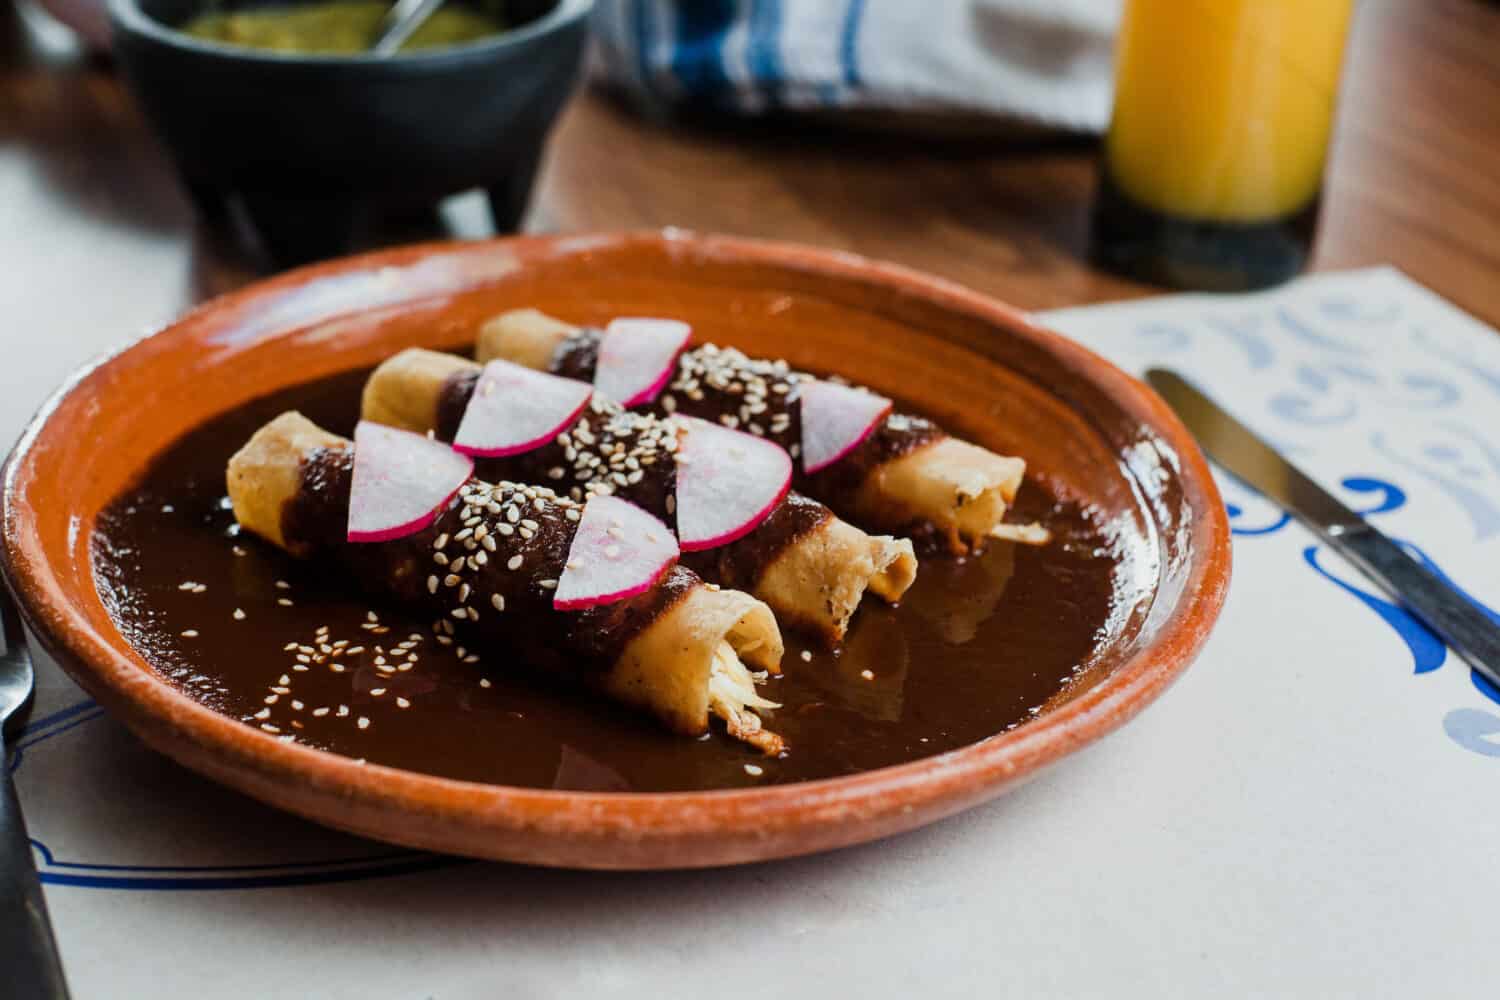 Envueltos de mole poblano or enchiladas with chicken, traditional mexican food in Mexico City